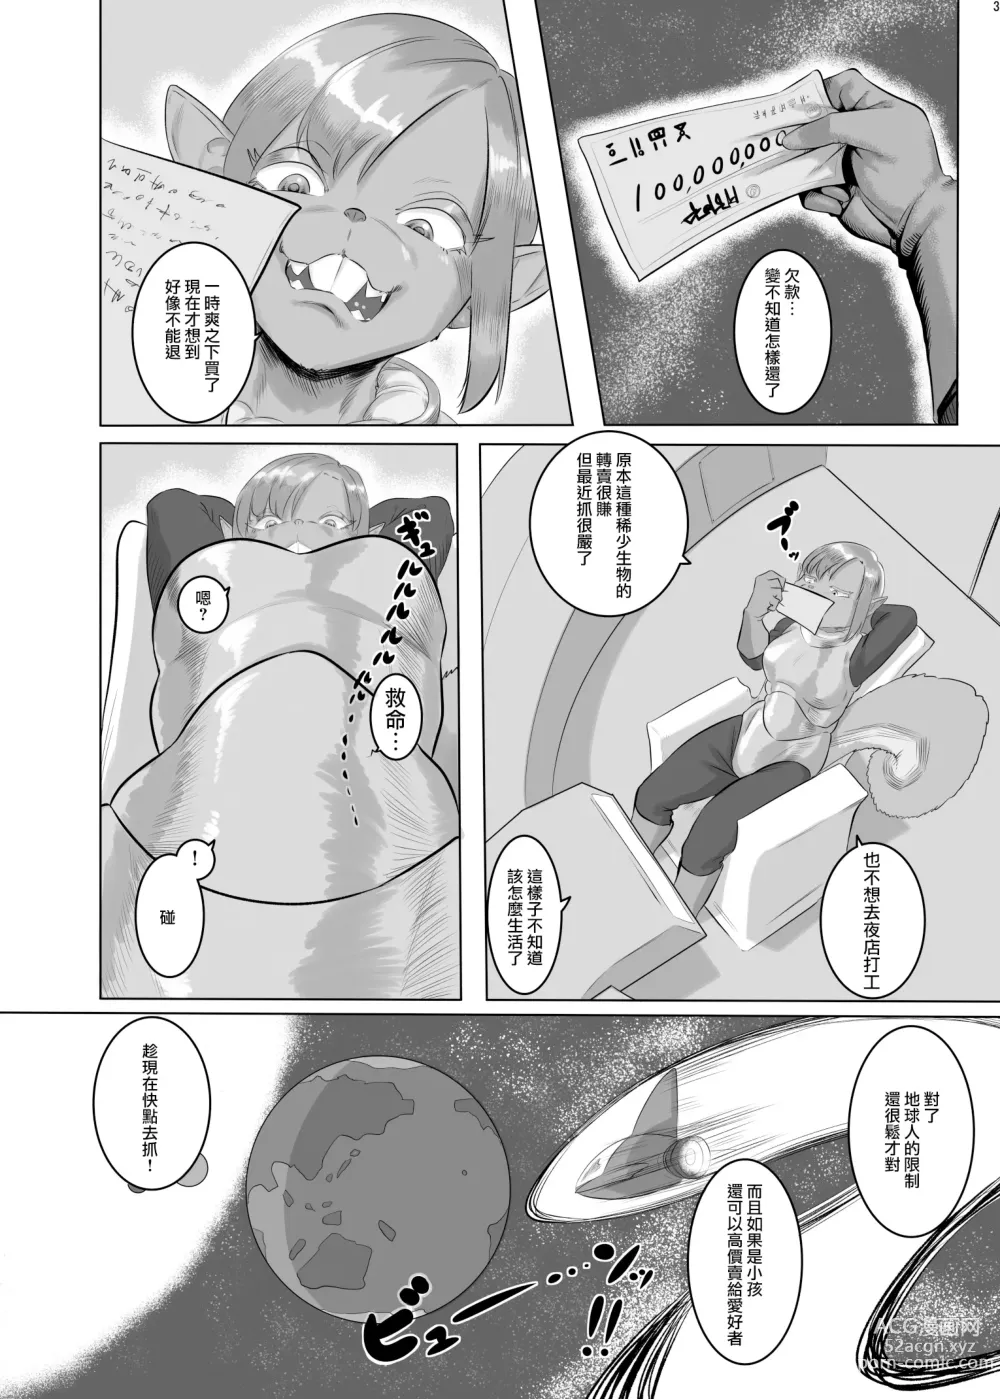 Page 3 of doujinshi Chikyuujin Youshoku Keikaku